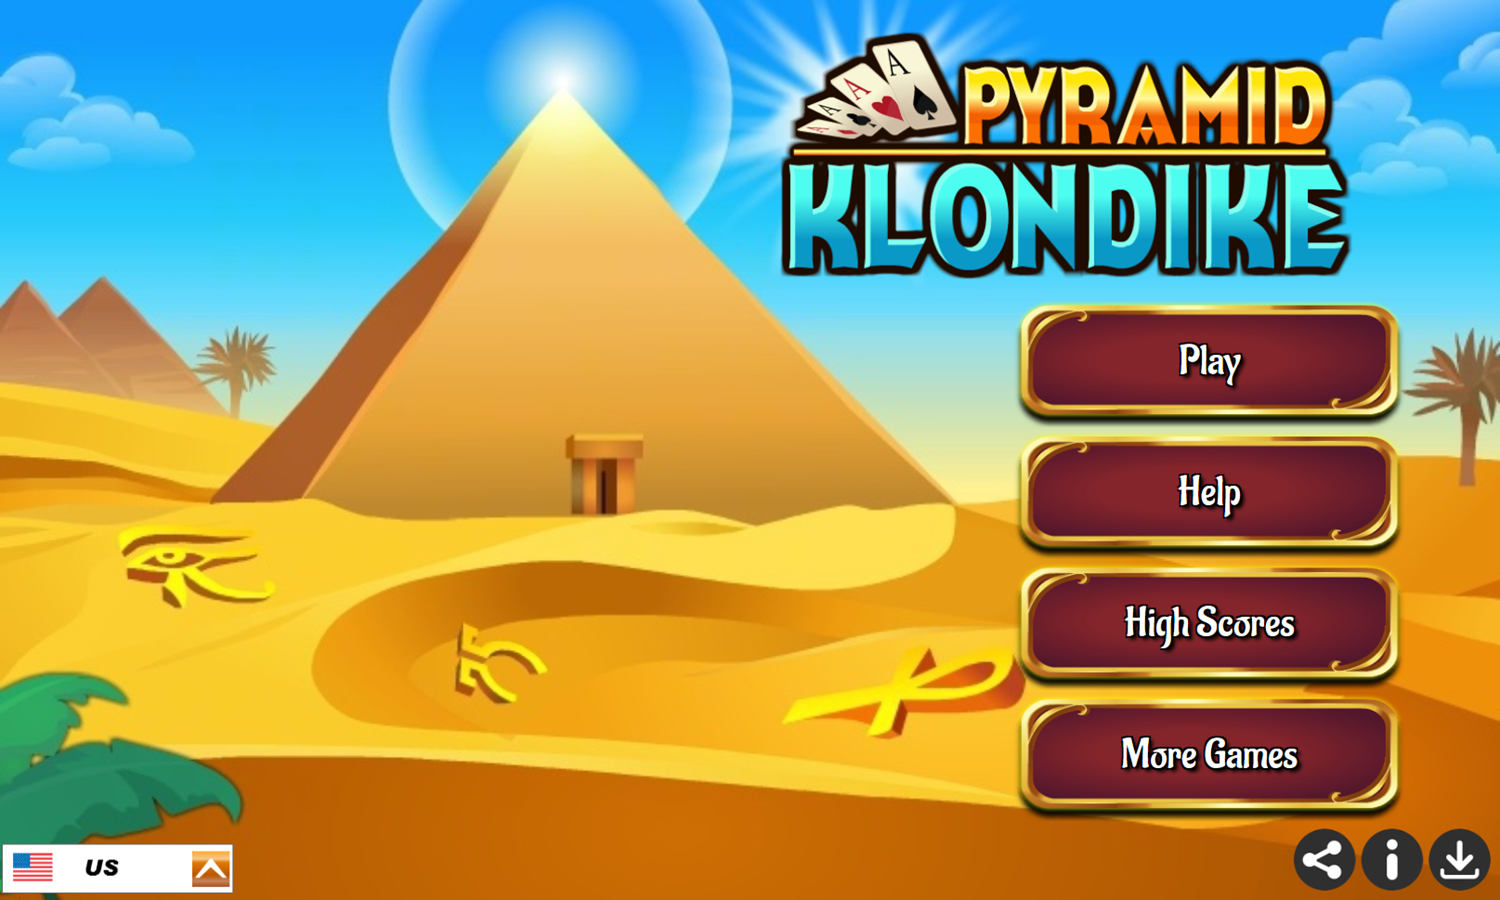 Pyramid Klondike Solitaire Game Welcome Screen Screenshot.